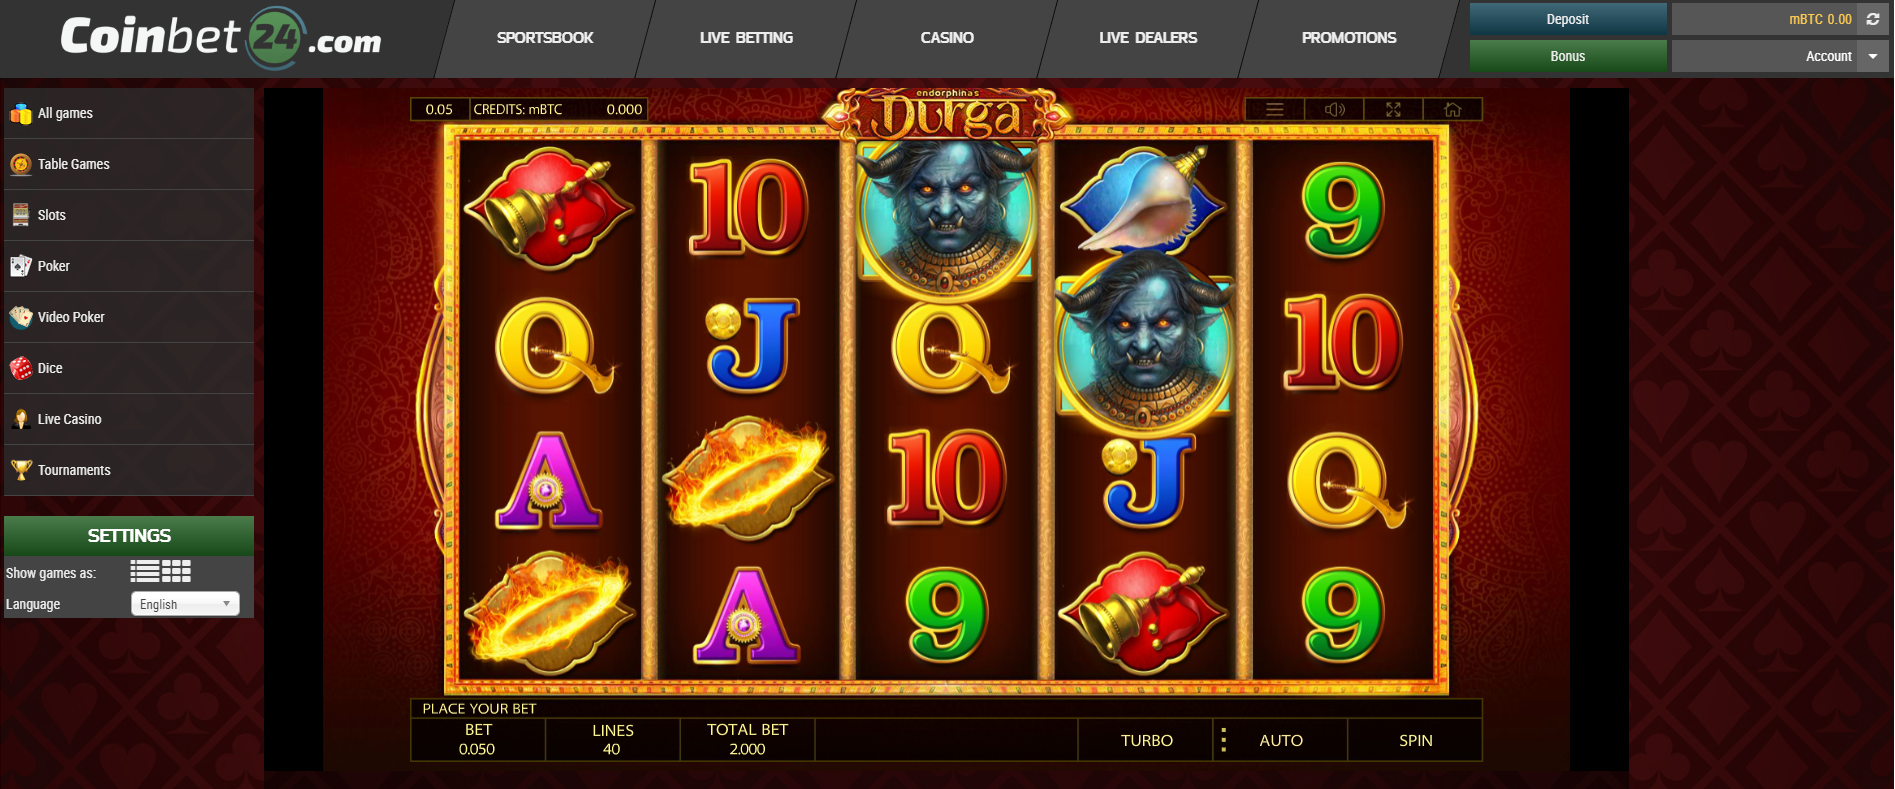 Bitcoin gambling website coinbet24 casino